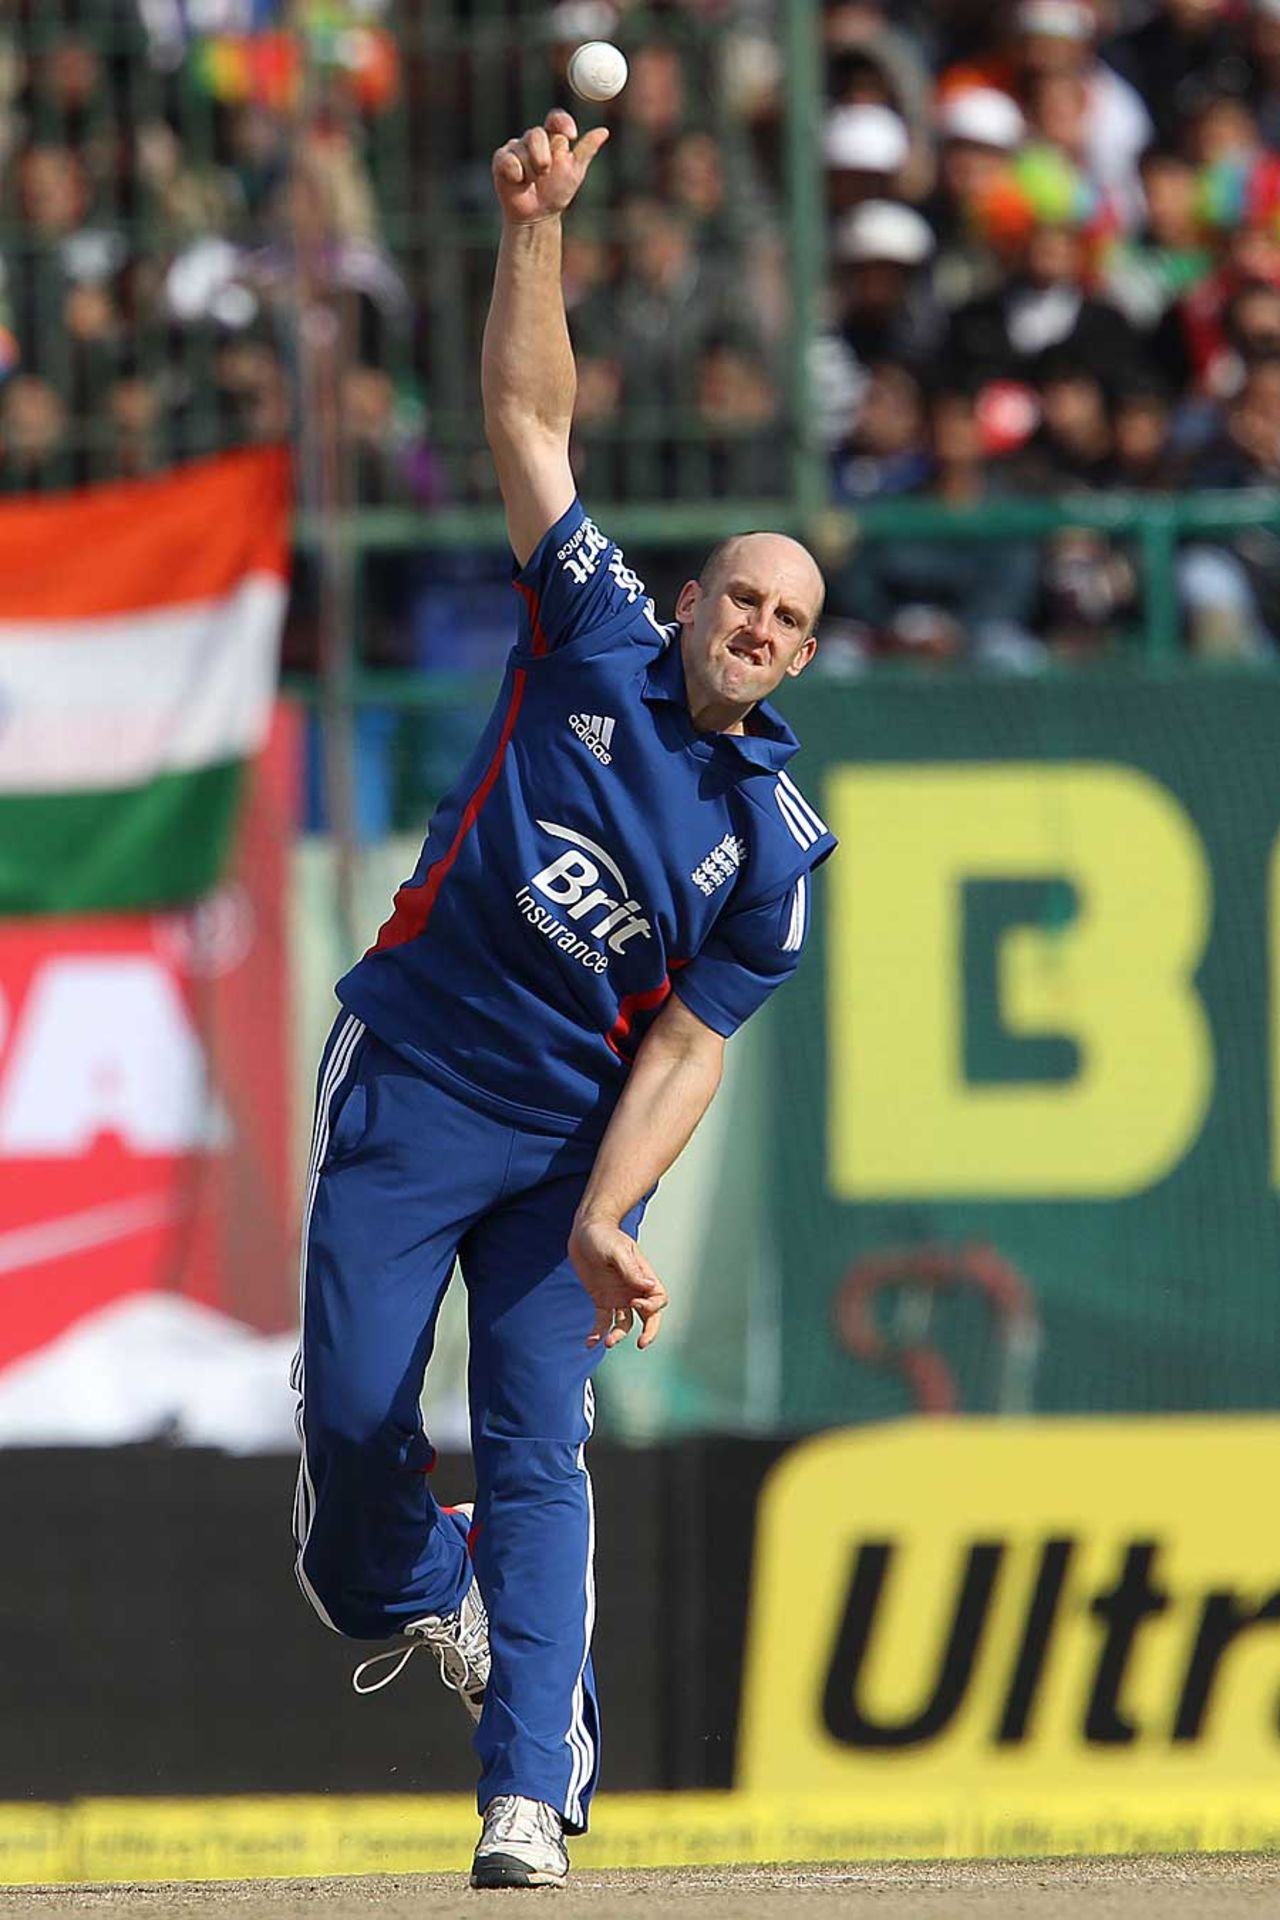 James Tredwell dismissed Gautam Gambhir, India v England, 5th ODI, Dharamsala, January 27, 2013